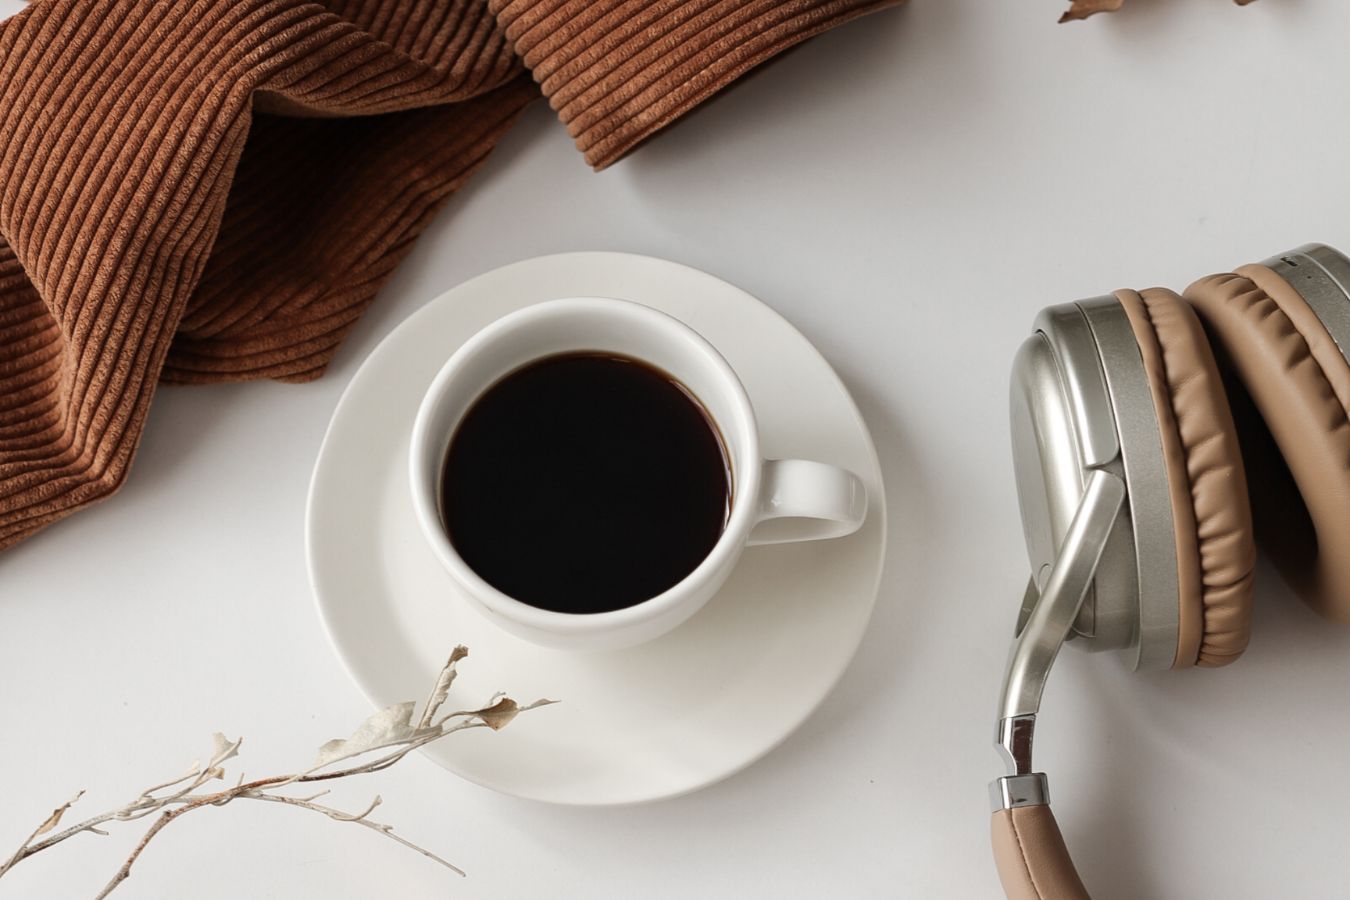 How Are Espresso Good For Health